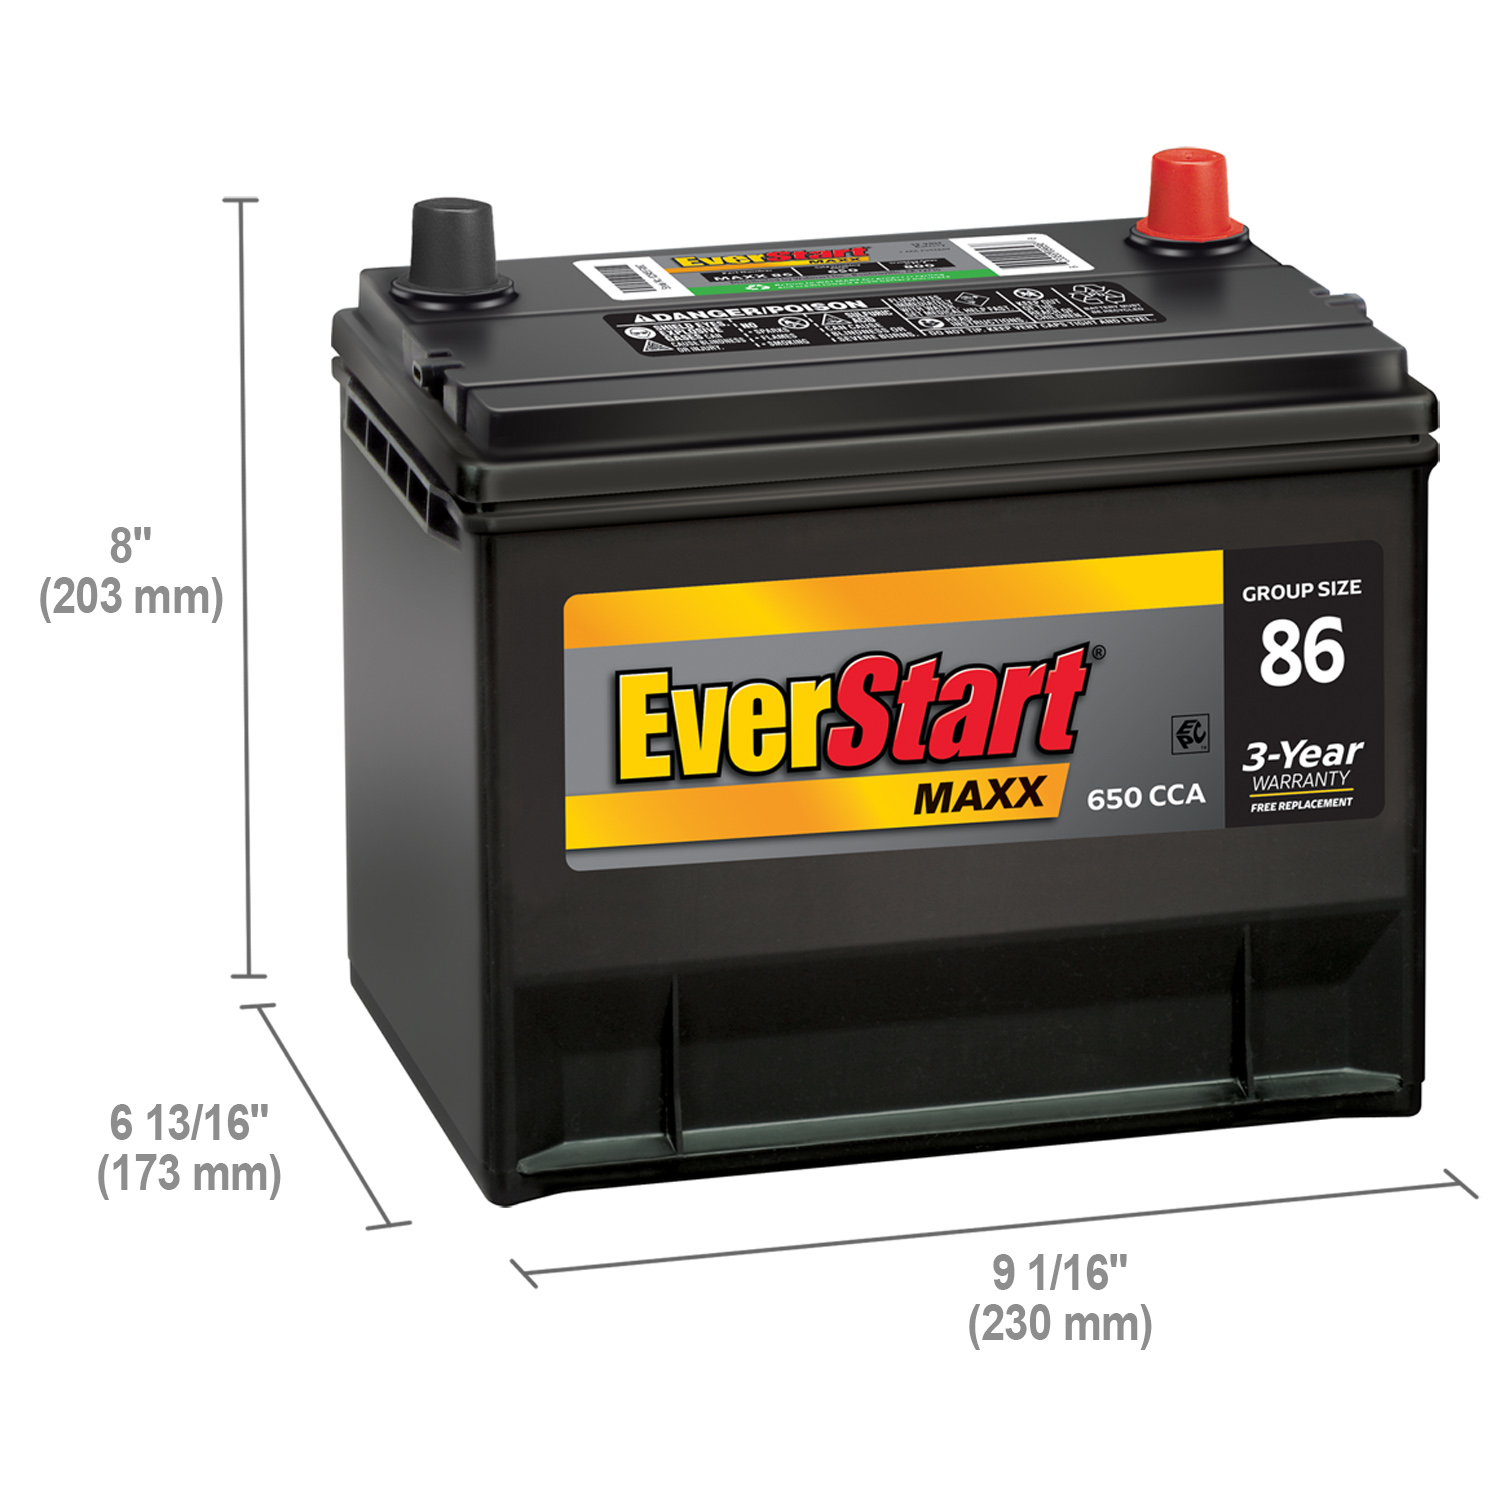 EverStart Maxx Lead Acid Automotive Battery, Group Size 86 12 Volt, 650 CCA - image 2 of 7